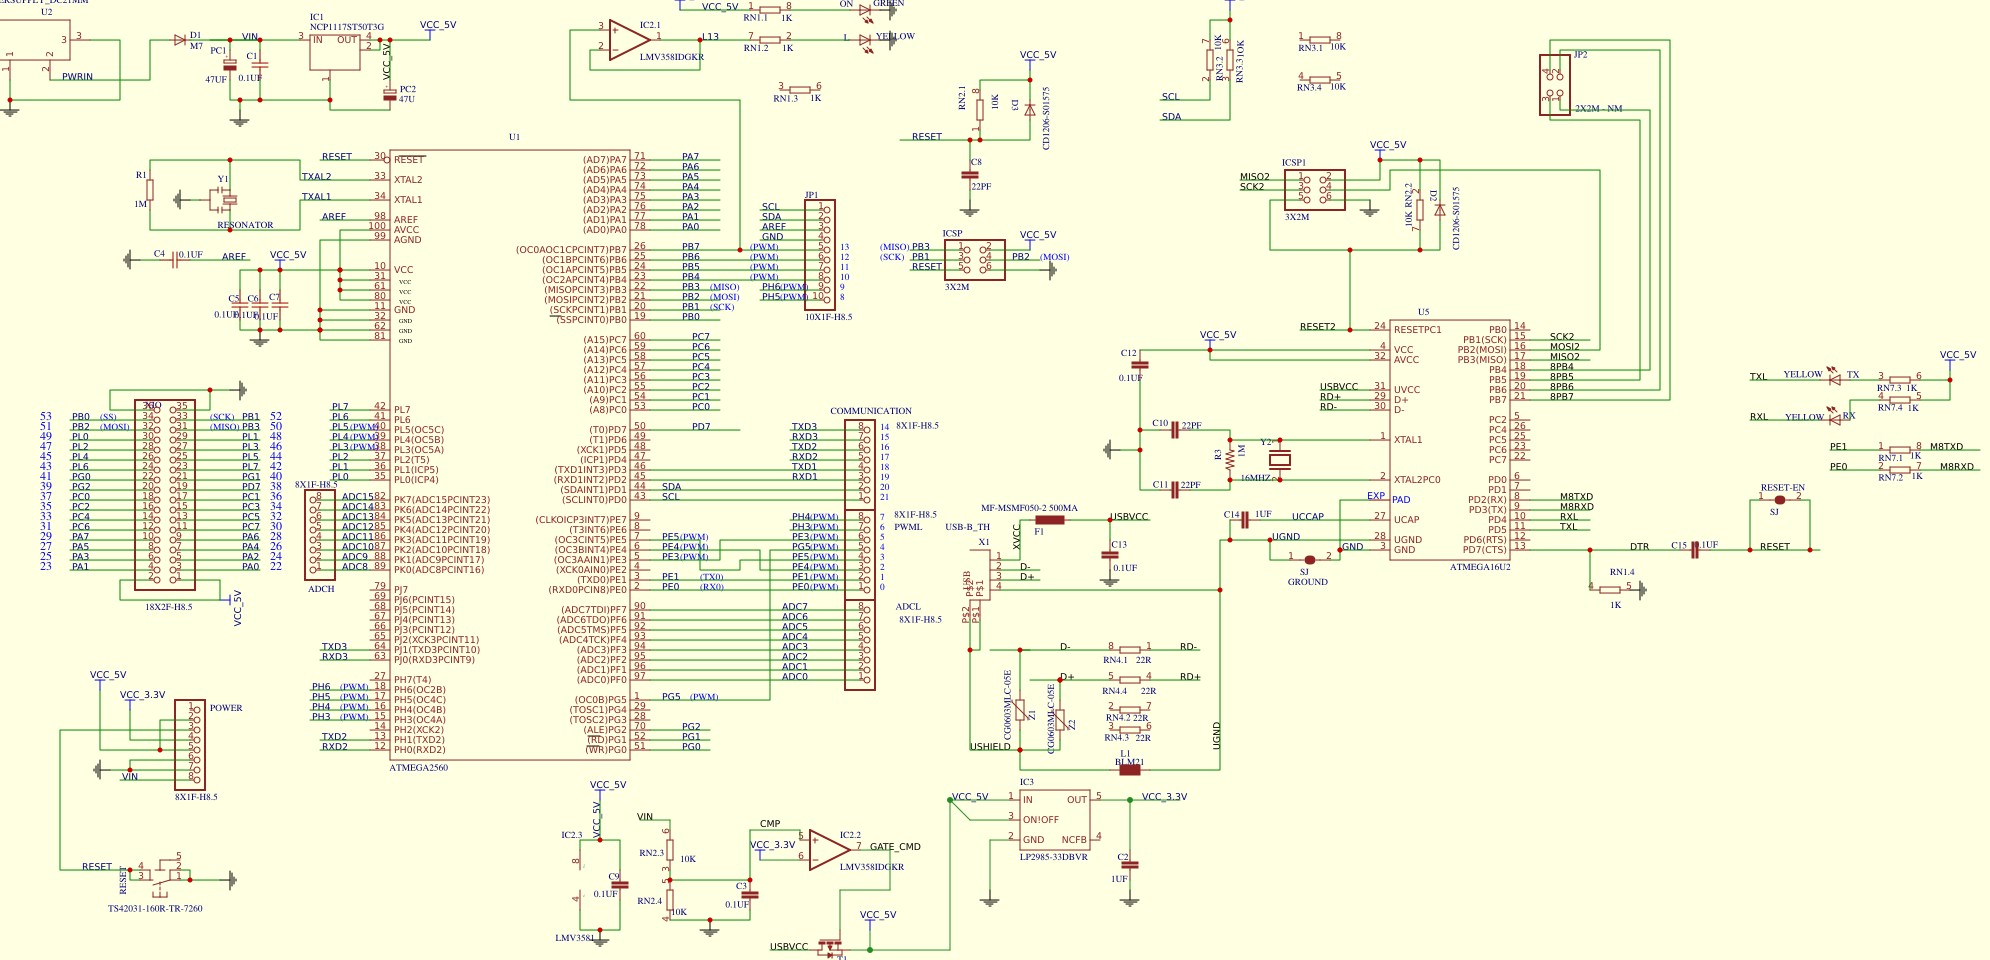 Arduino Mega 2560 schematic AasmEVd7P